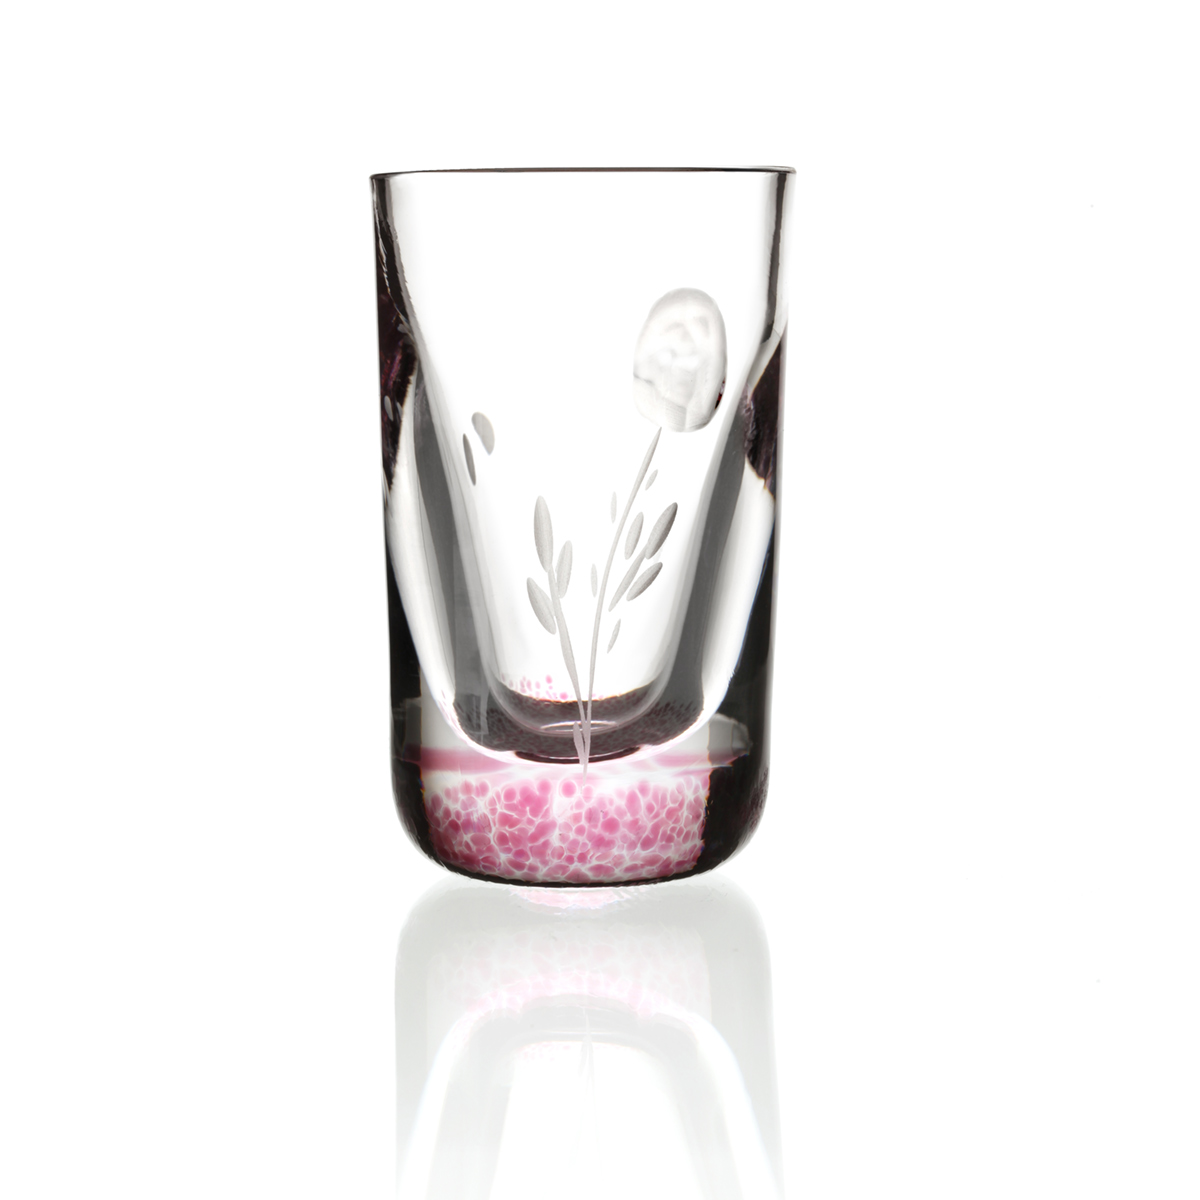 Irish Rose Shotglas  - Handgefertigtes Kristallglas aus Irland